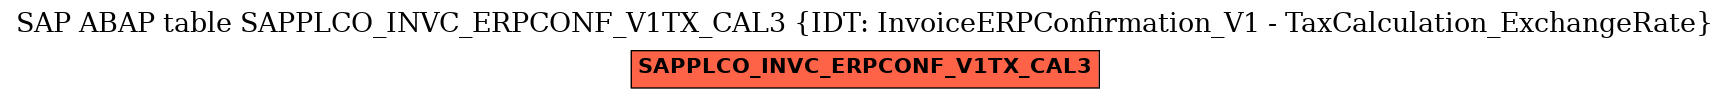 E-R Diagram for table SAPPLCO_INVC_ERPCONF_V1TX_CAL3 (IDT: InvoiceERPConfirmation_V1 - TaxCalculation_ExchangeRate)